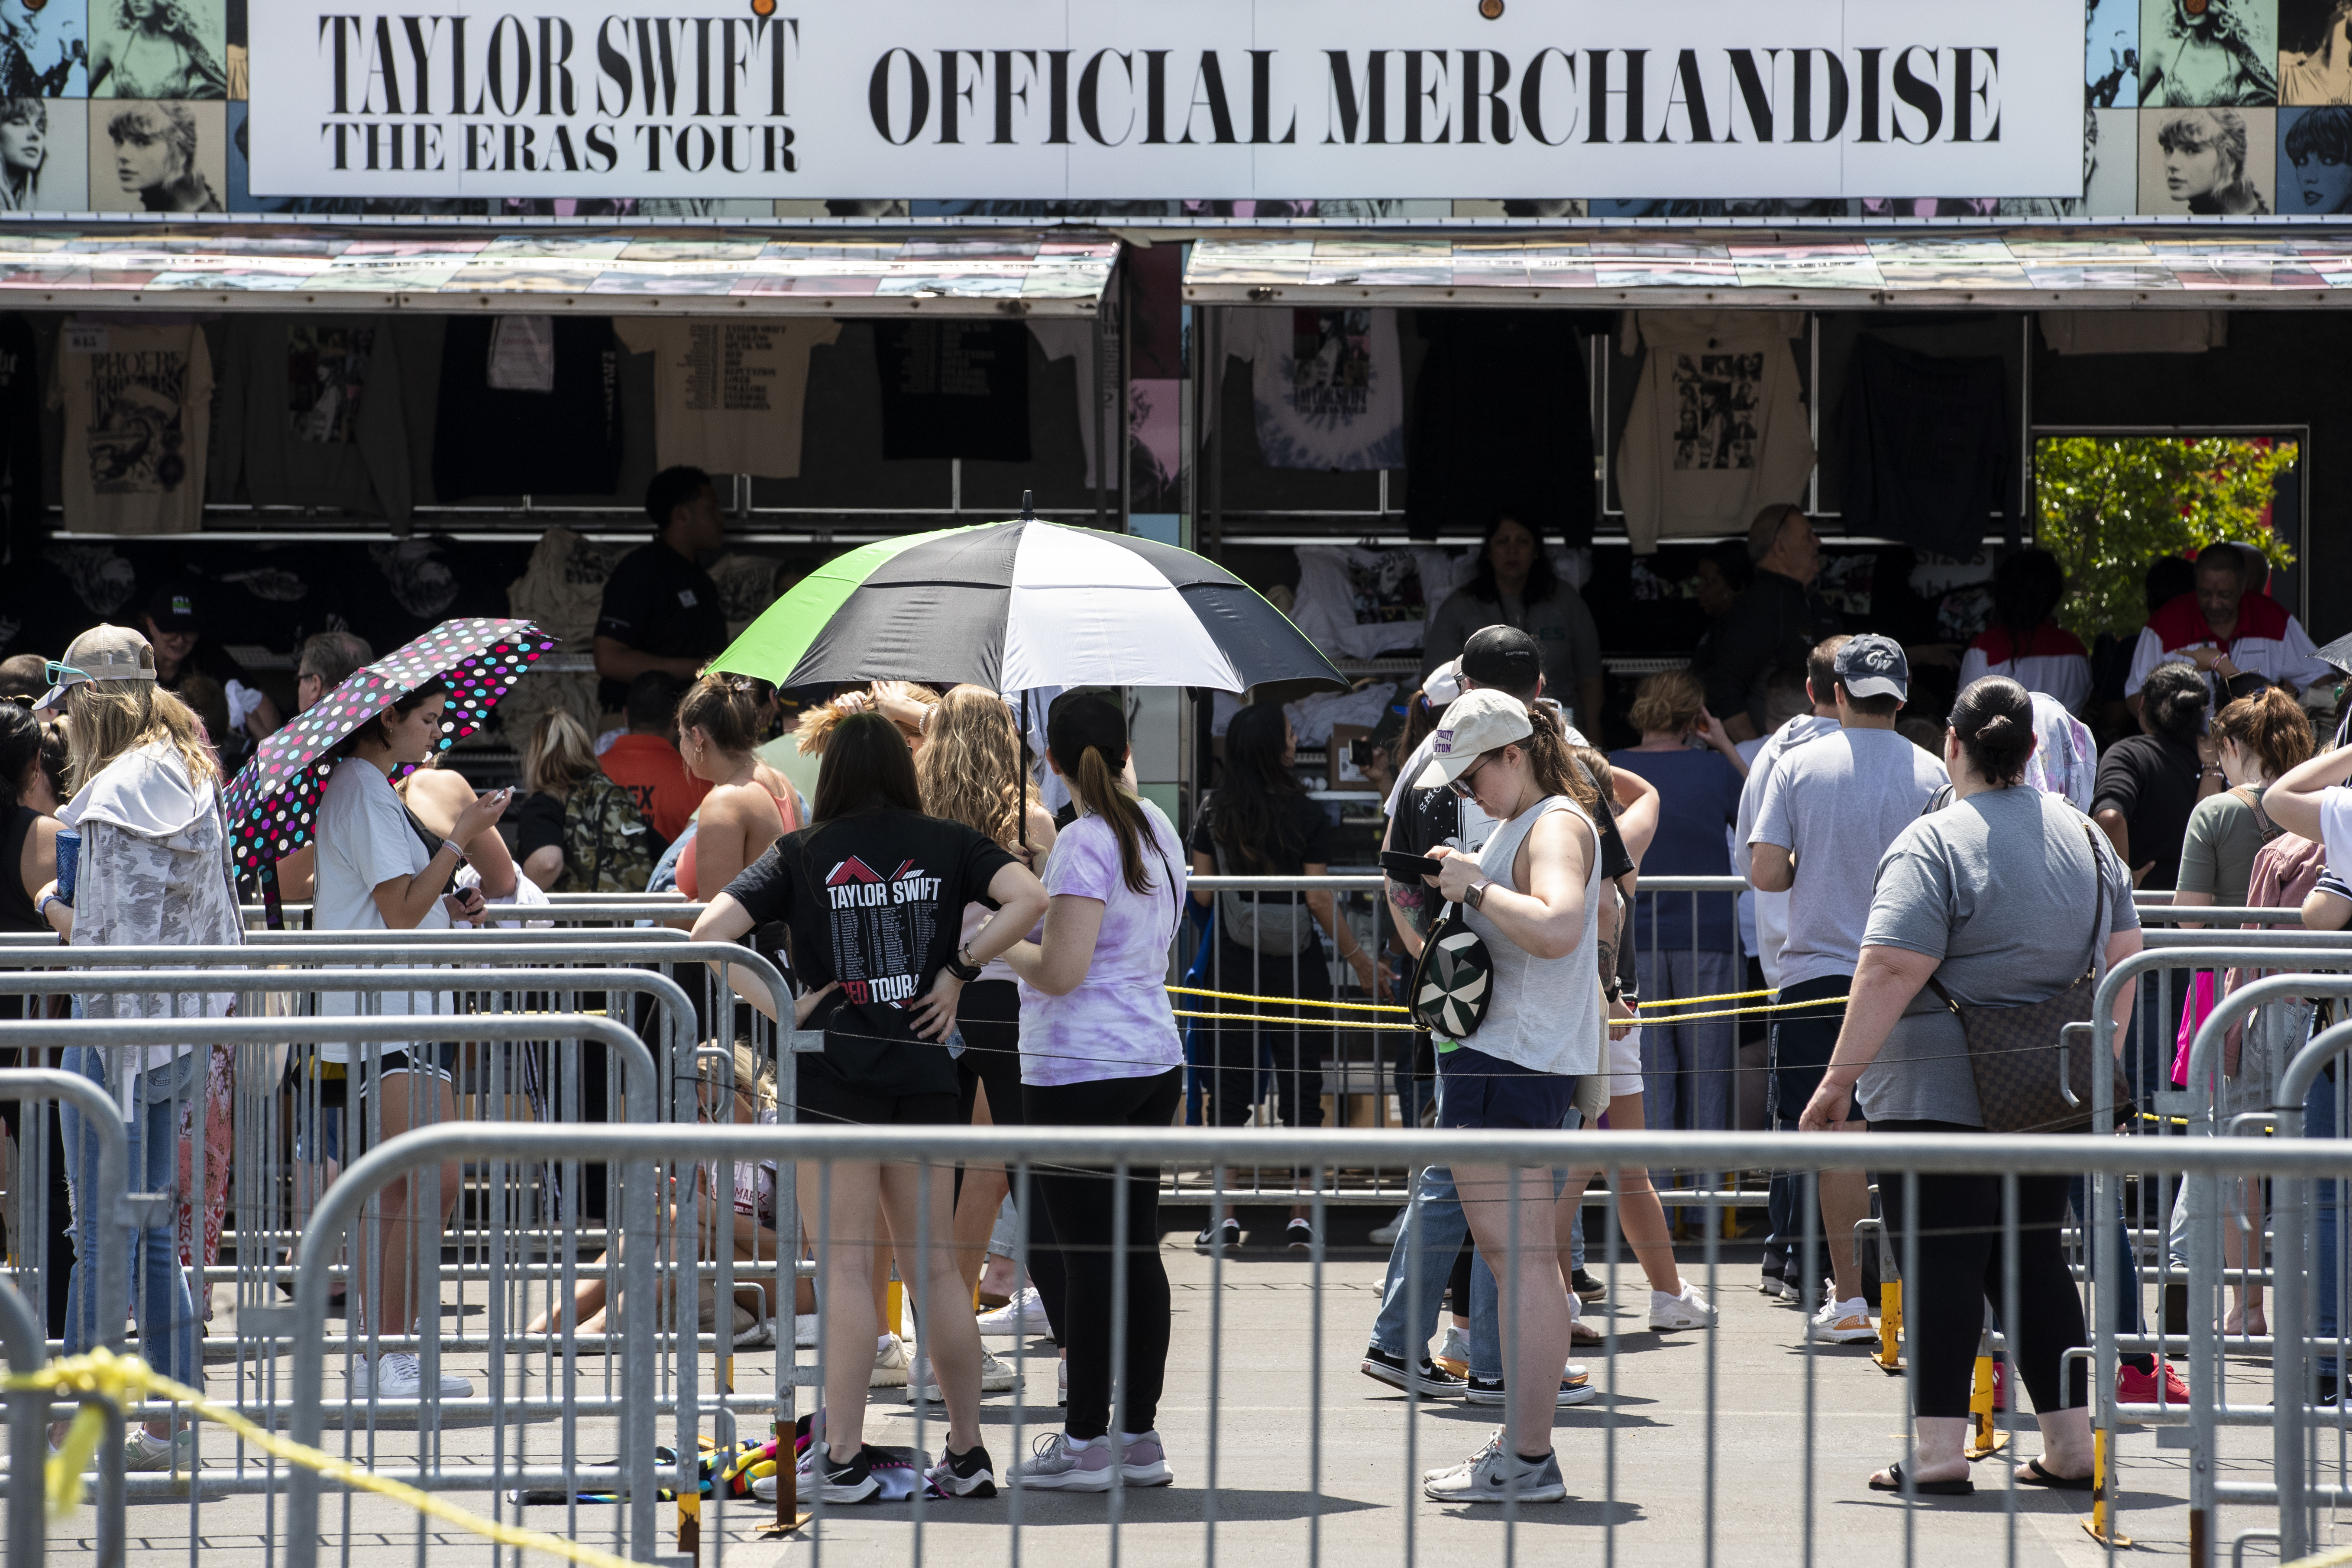 Short Lines For Taylor Swift 'Eras' Tour Merch At MetLife (PHOTOS)